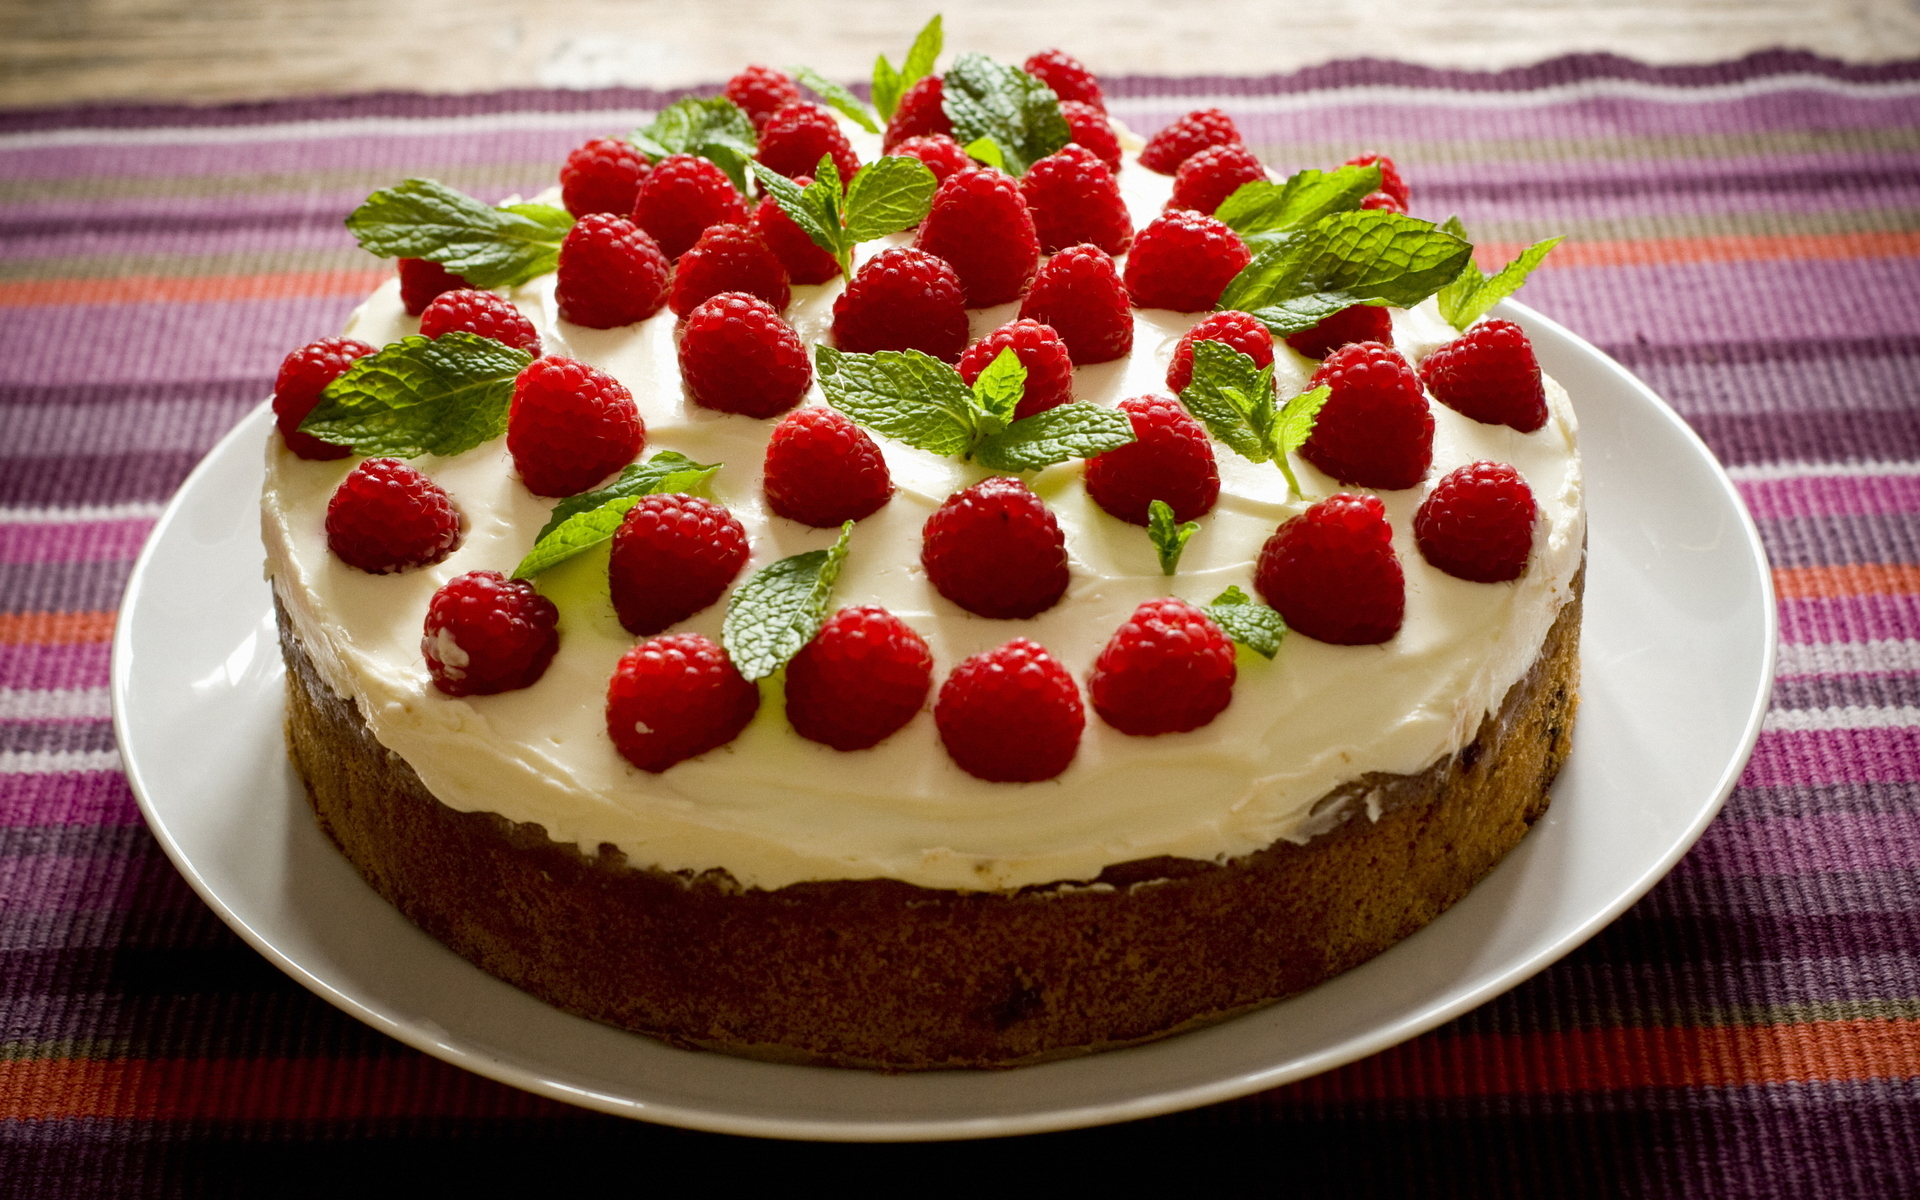 Food_Cakes_and_Sweet_Cake_with_raspberries_031169_.jpg